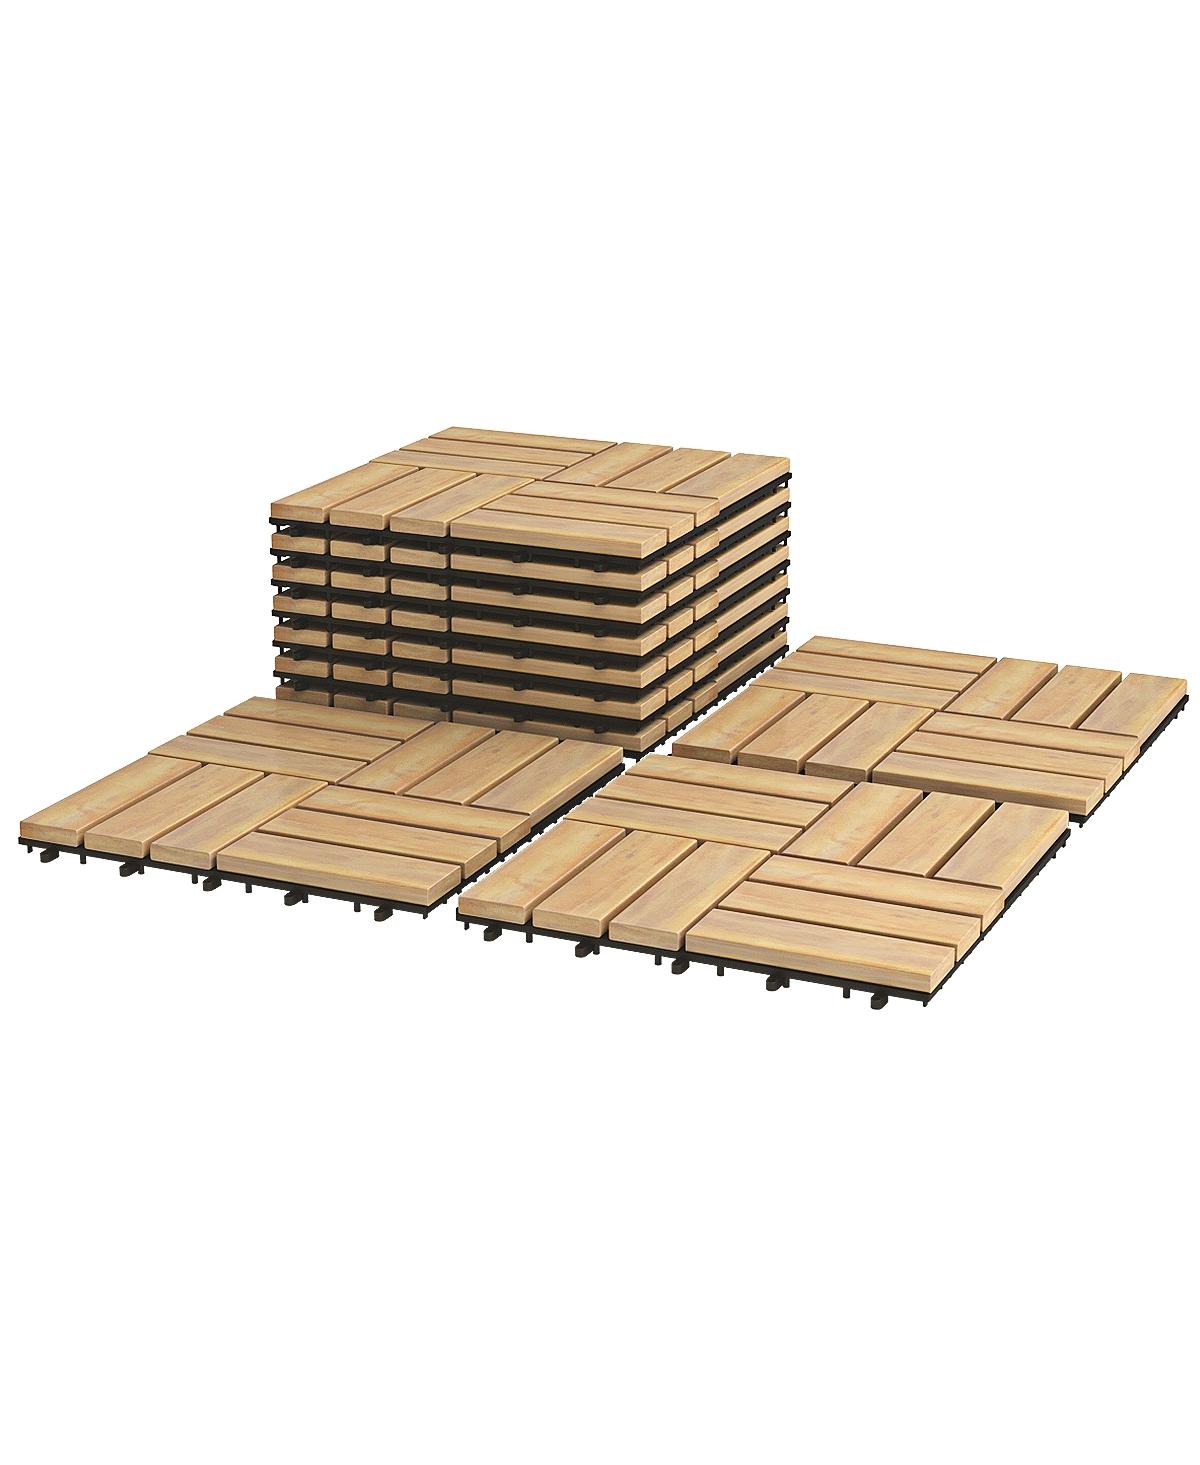 10 Pieces 12 x 12 Inch Acacia Wood Interlocking Check Deck Tiles - Brown